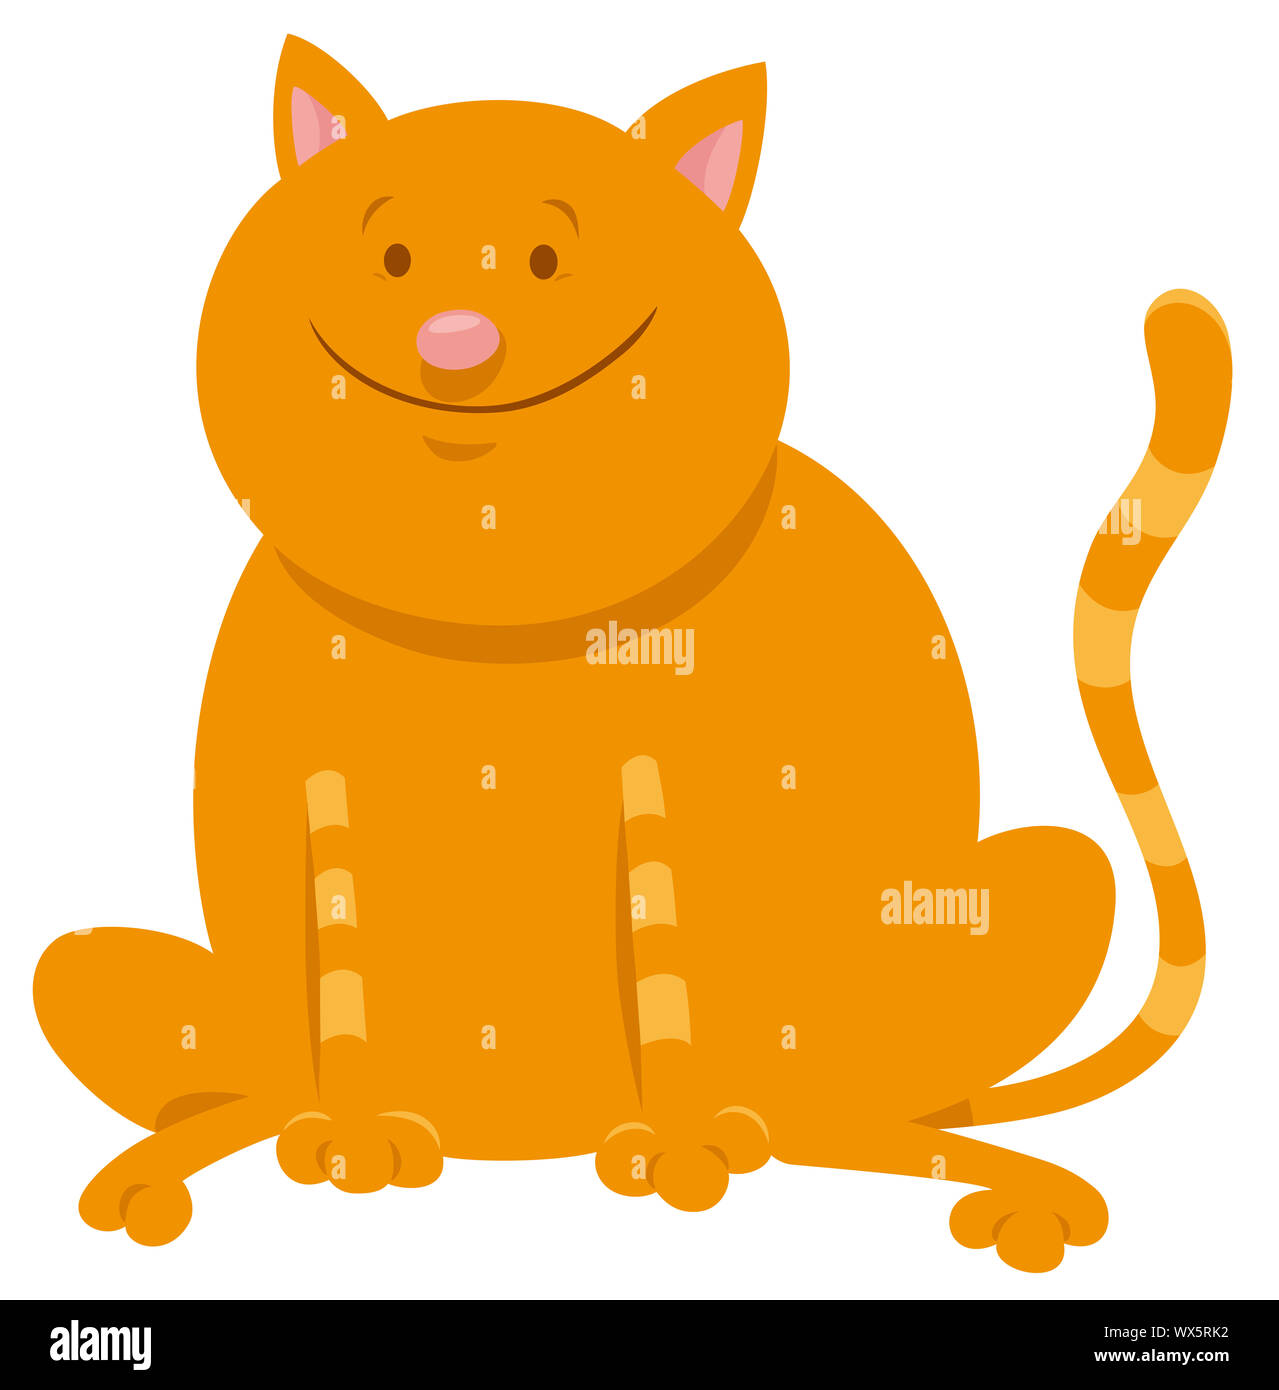 Cute Yellow Cat Cartoon Animal Character Stock Photo Alamy